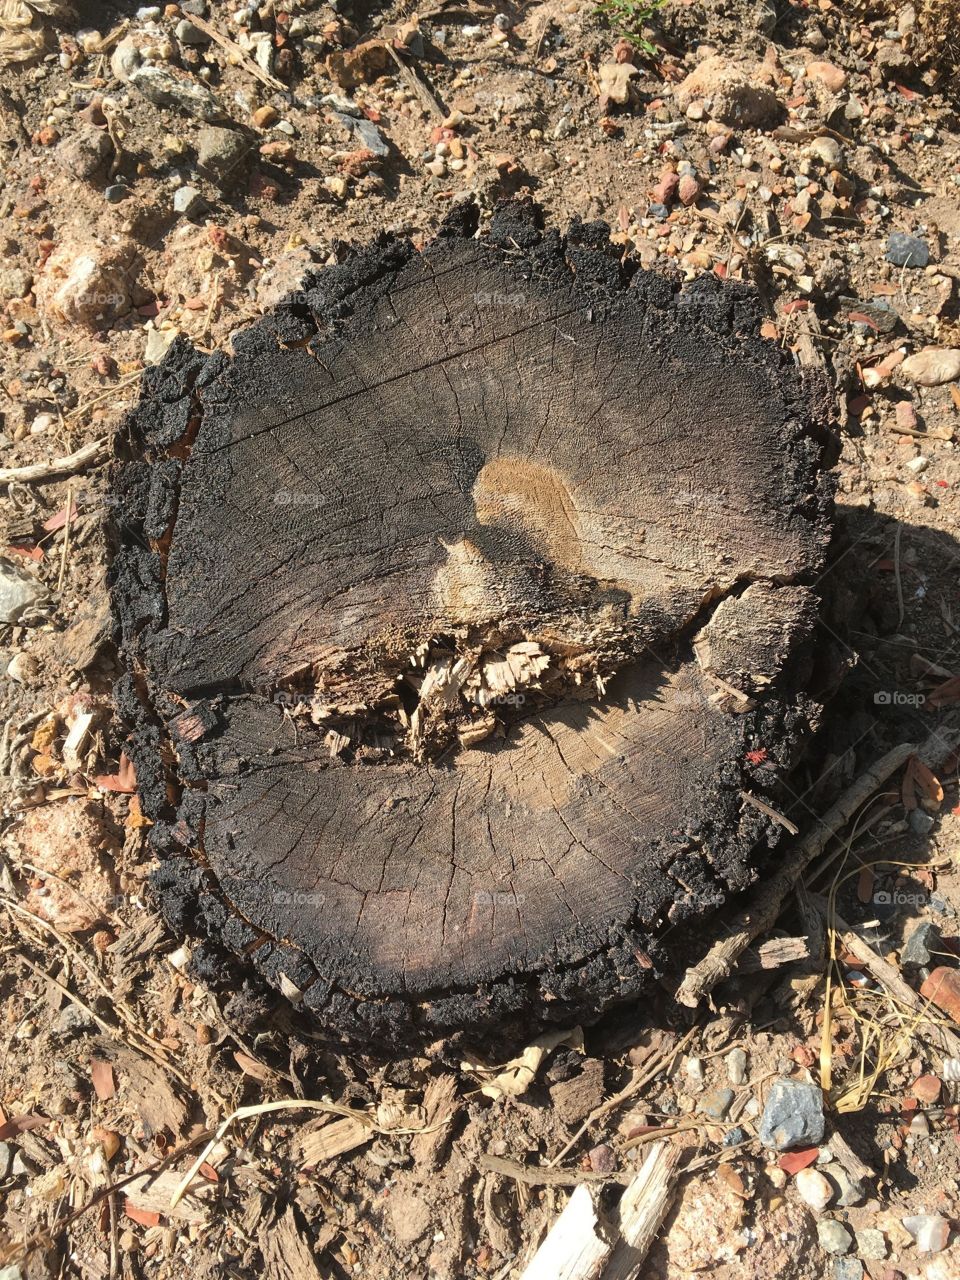 Dry stump on the ground